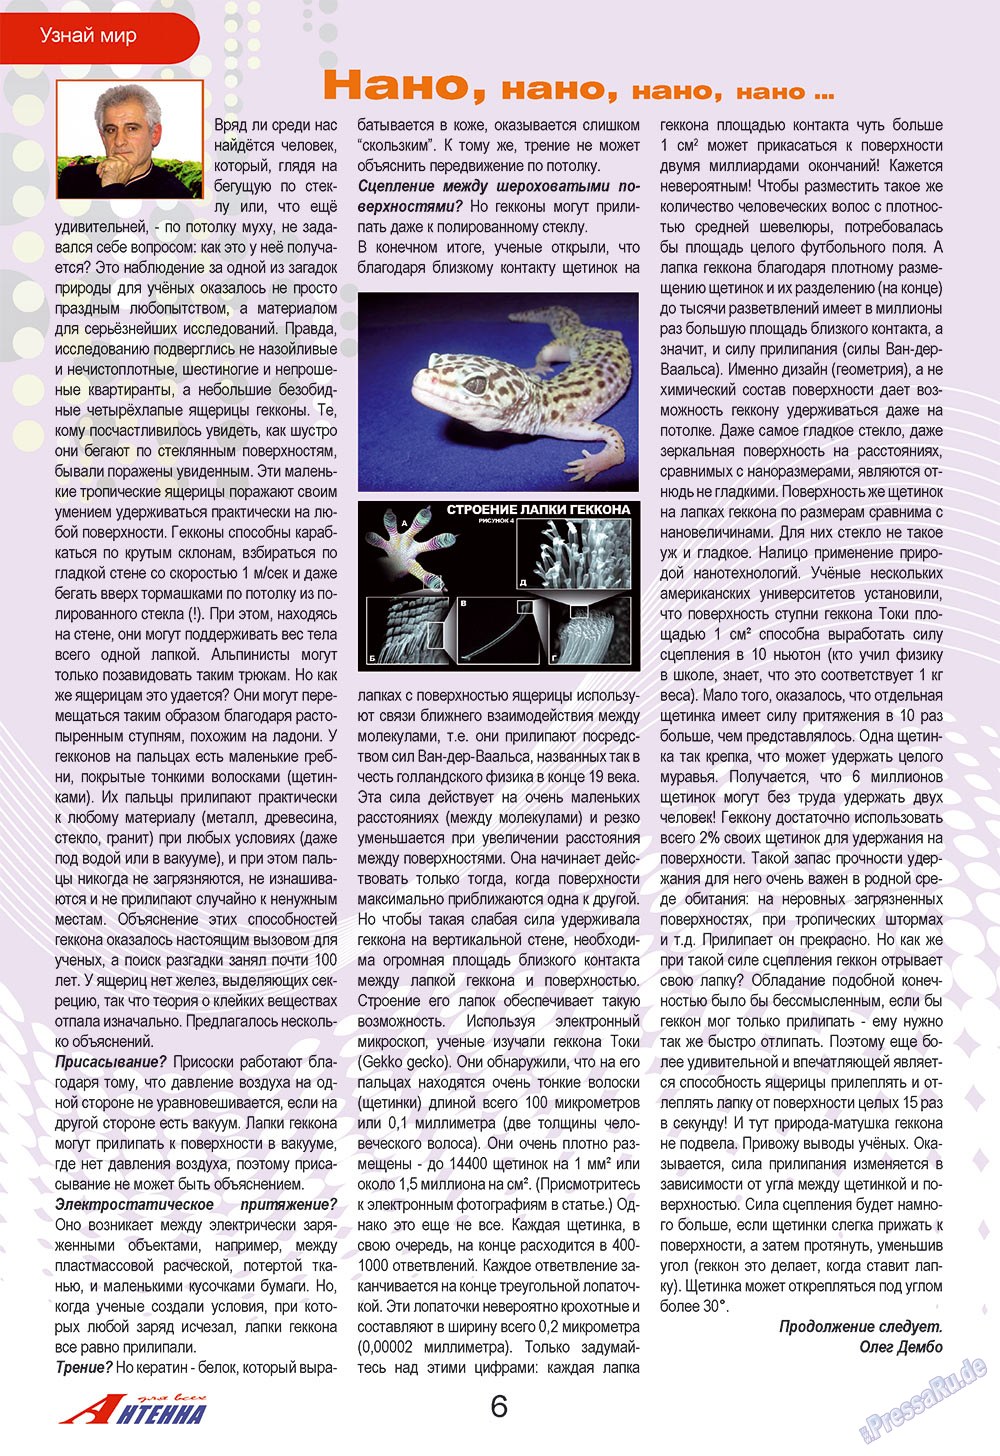 Антенна (журнал). 2009 год, номер 3, стр. 6